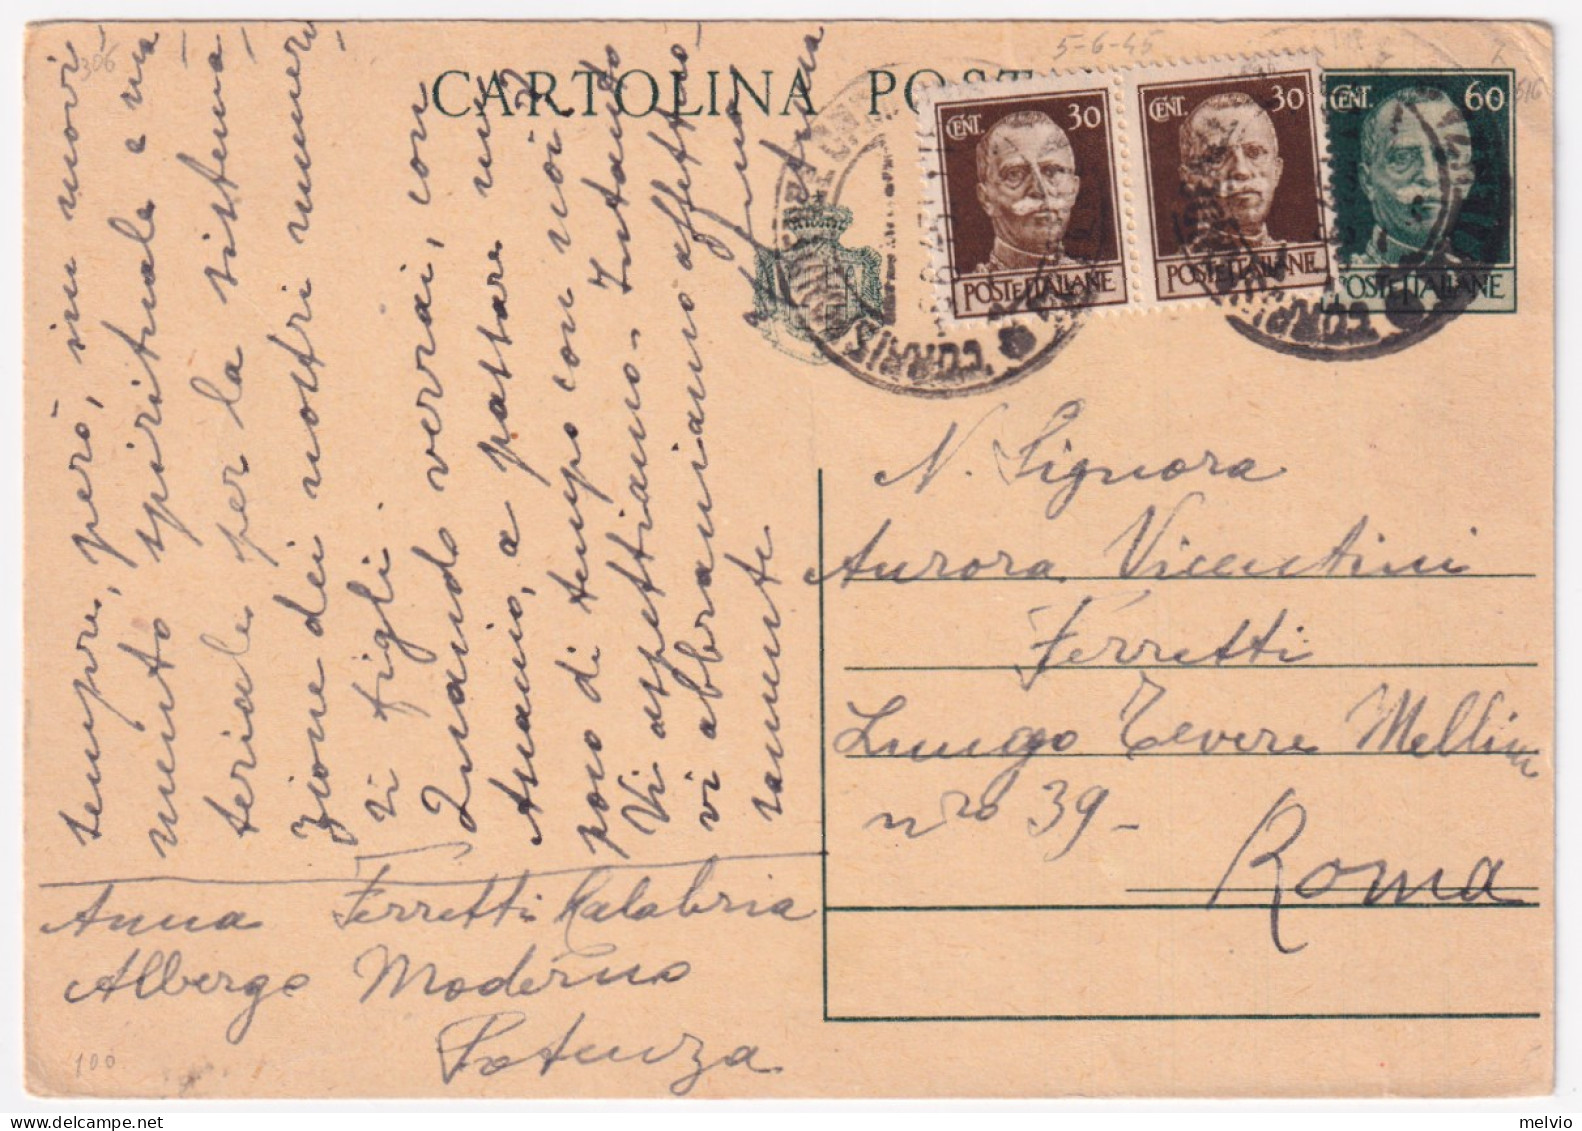 1945-Imperiale Senza Fasci Coppia C.30 (516) Su Cartolina Postale C.60 (112) - Marcophilie